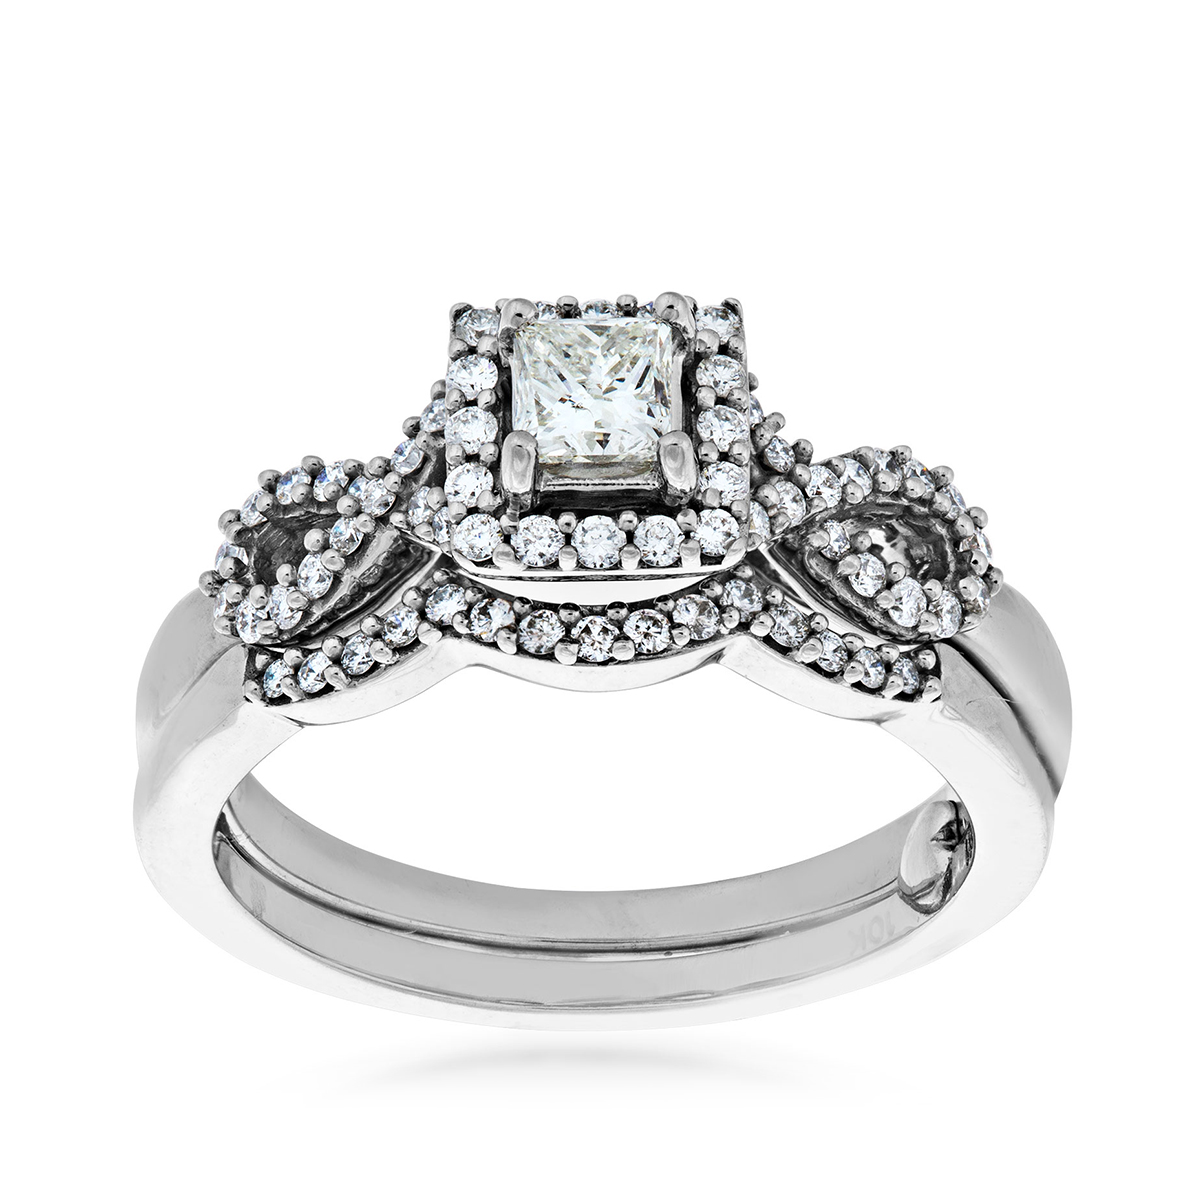 10K white & pink gold 3/4 ct. tw. princess cut diamond halo twist wedding set